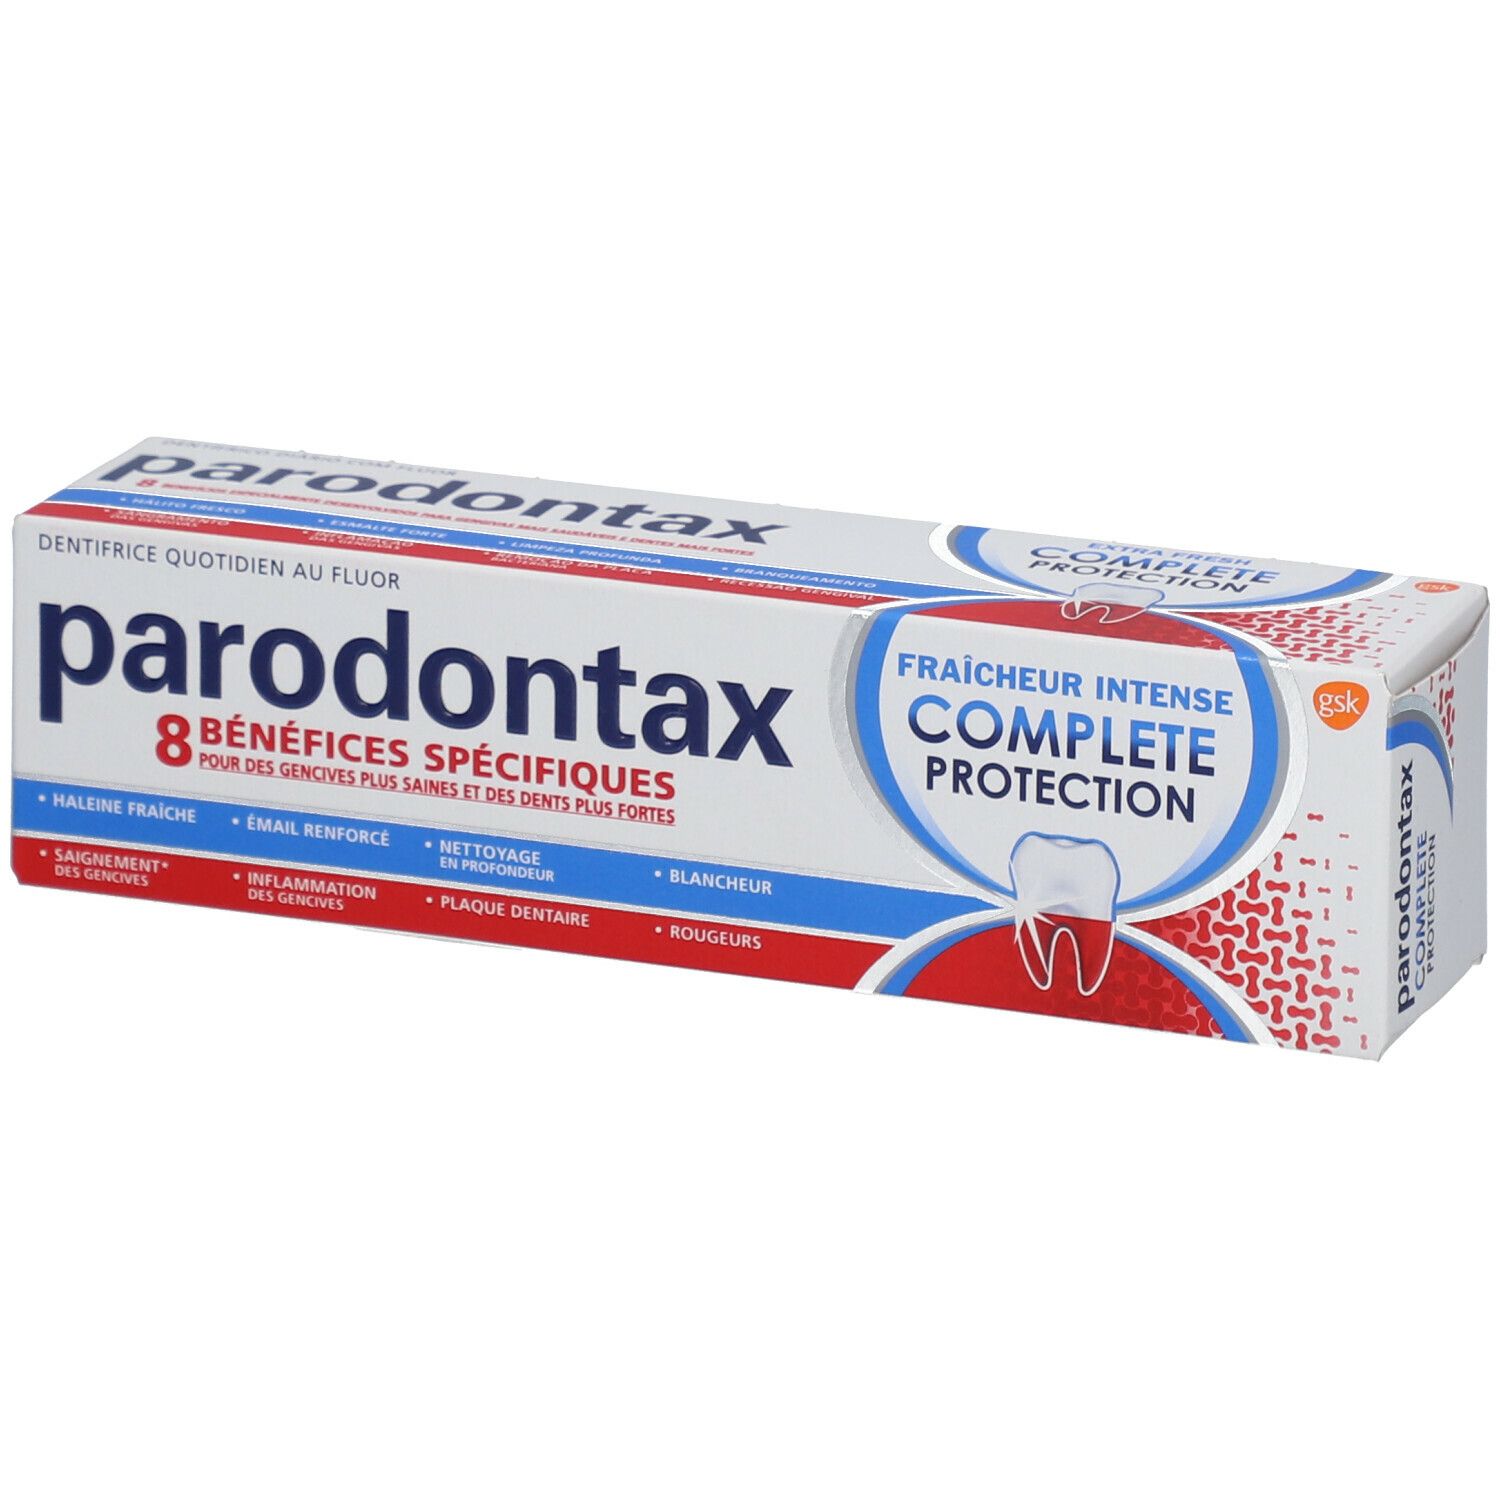 parodontax Fraîcheur Intense Complete protection dentifrice